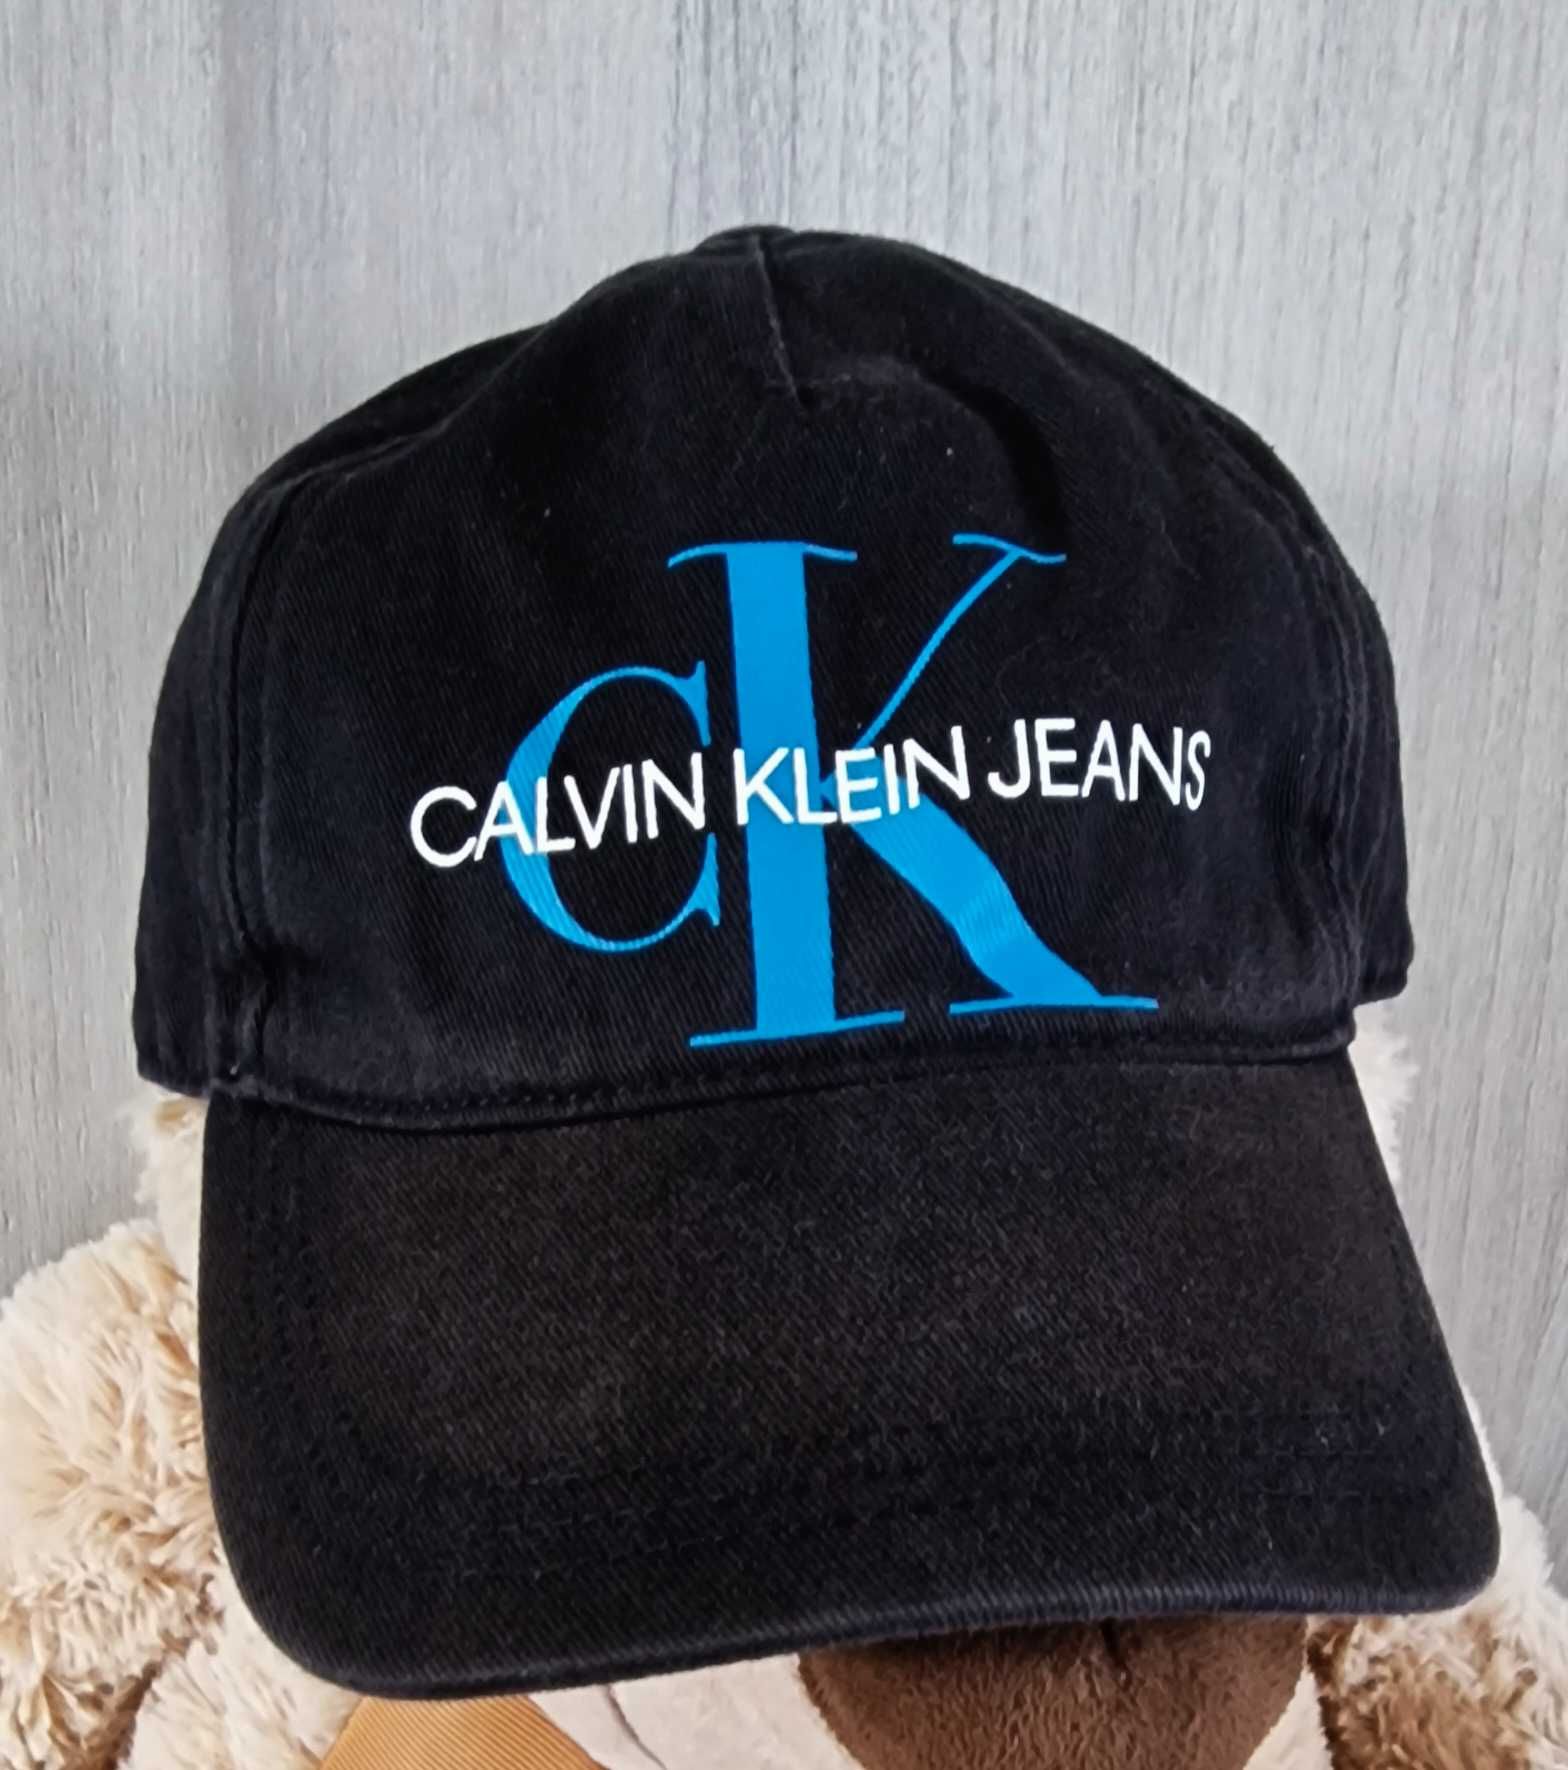 Oryginalna czapka chlopieca marki Calvin Klein r.L/XL